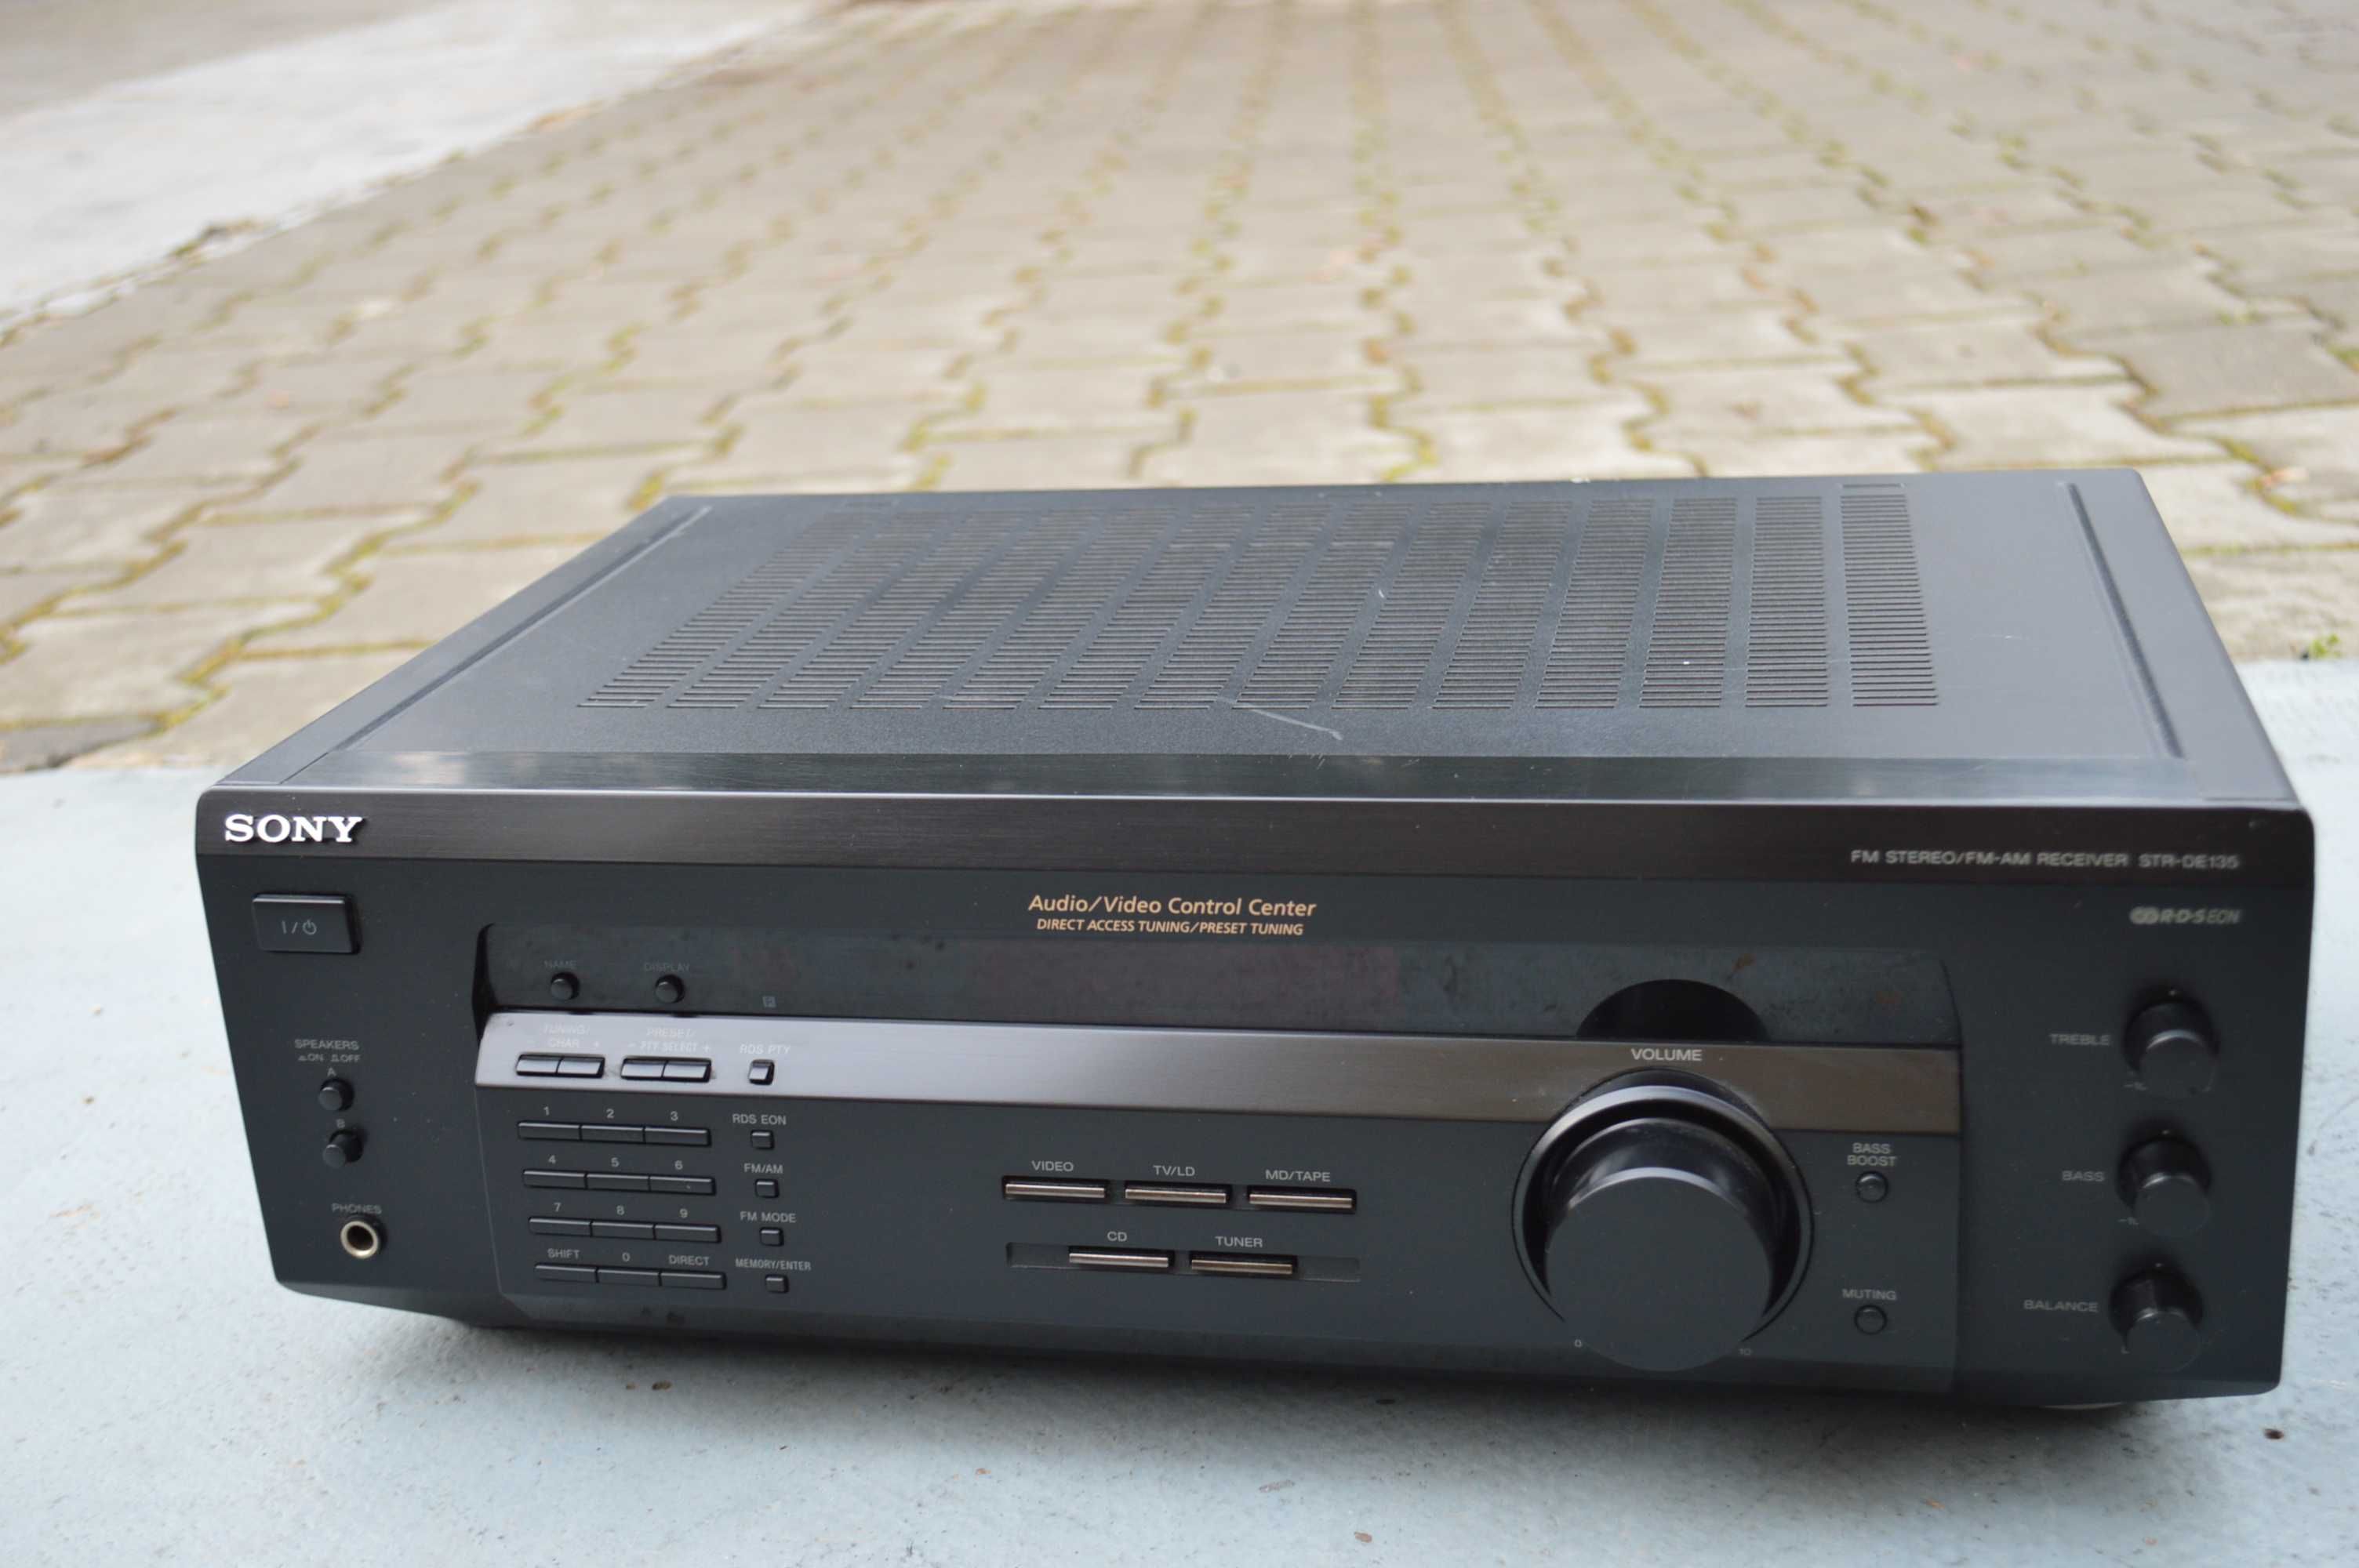 Amplificator Sony STR-DE 135